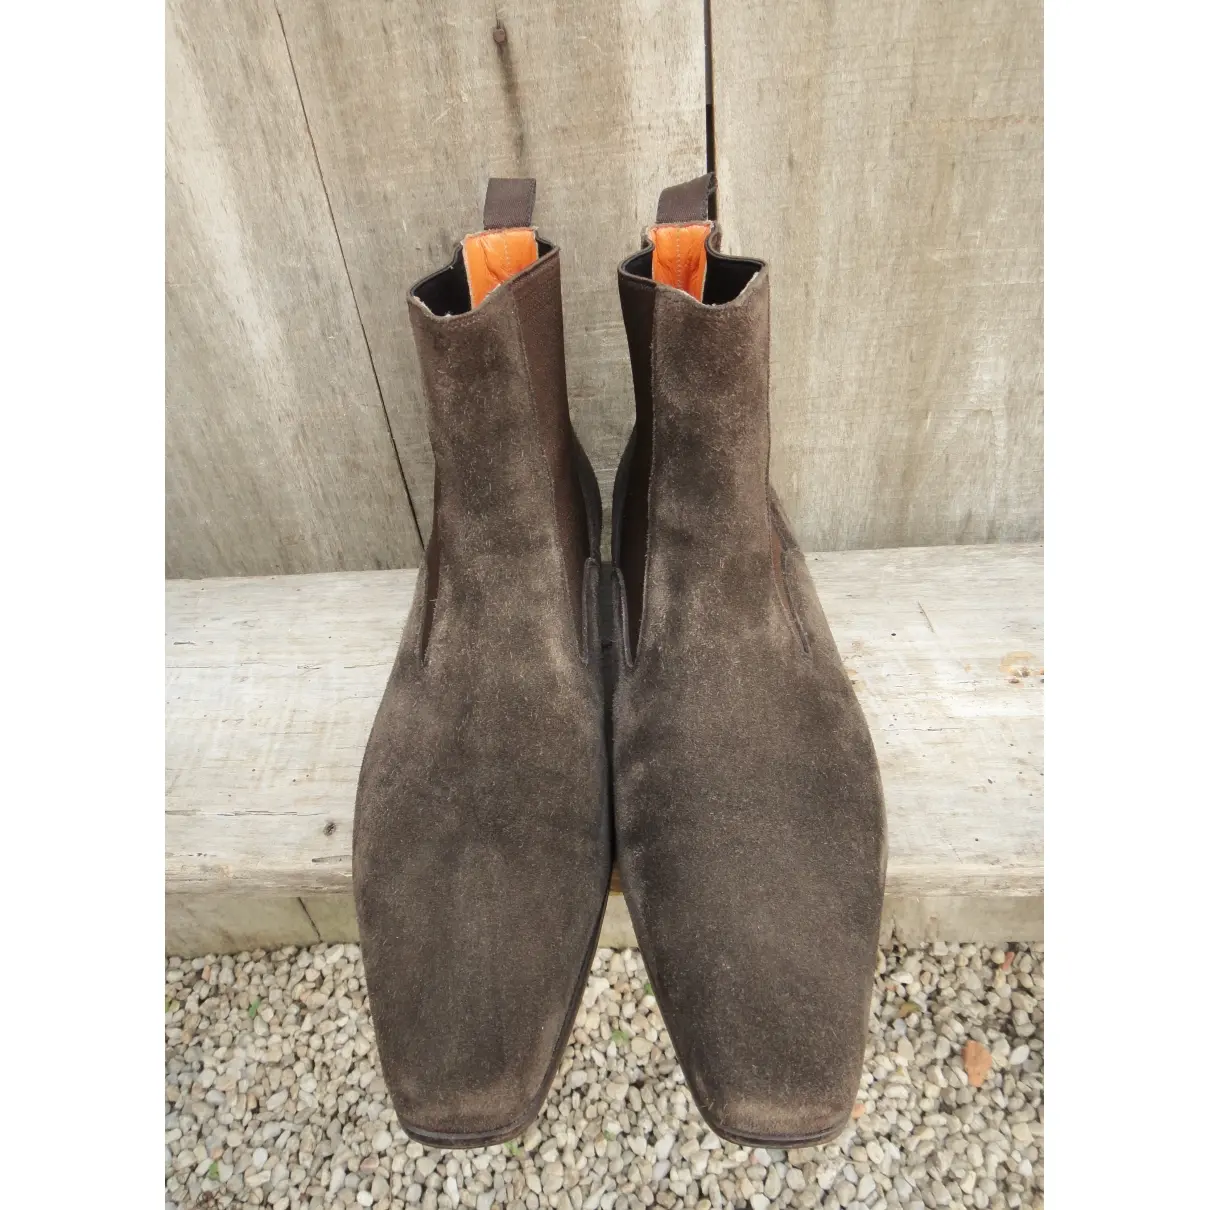 Buy Santoni Brown Suede Boots online